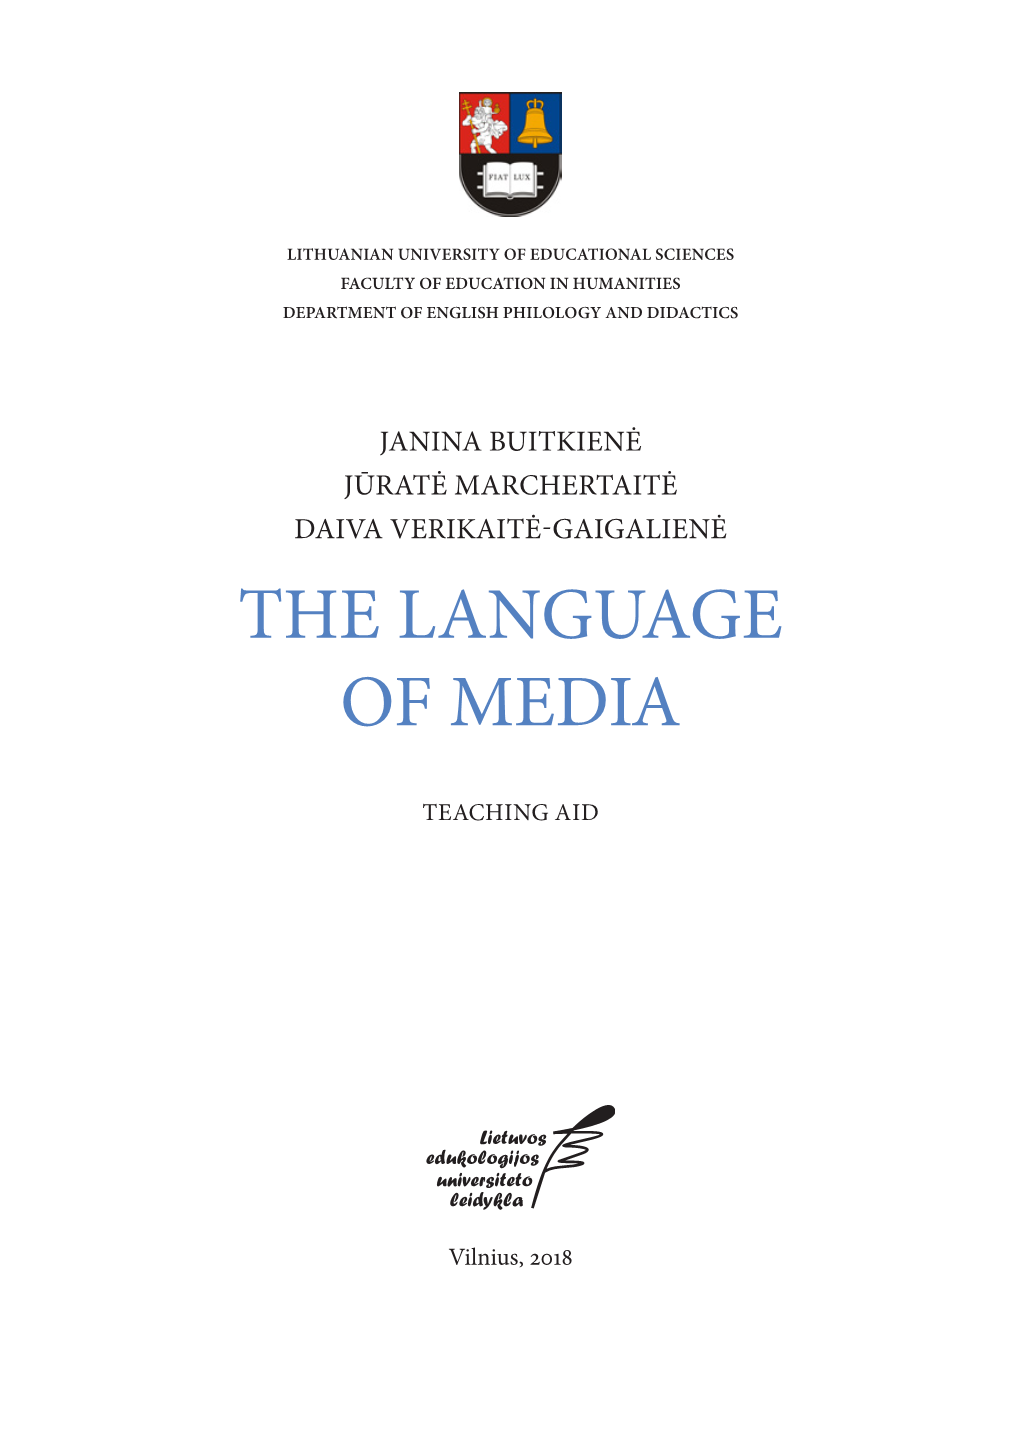 The Language of Media